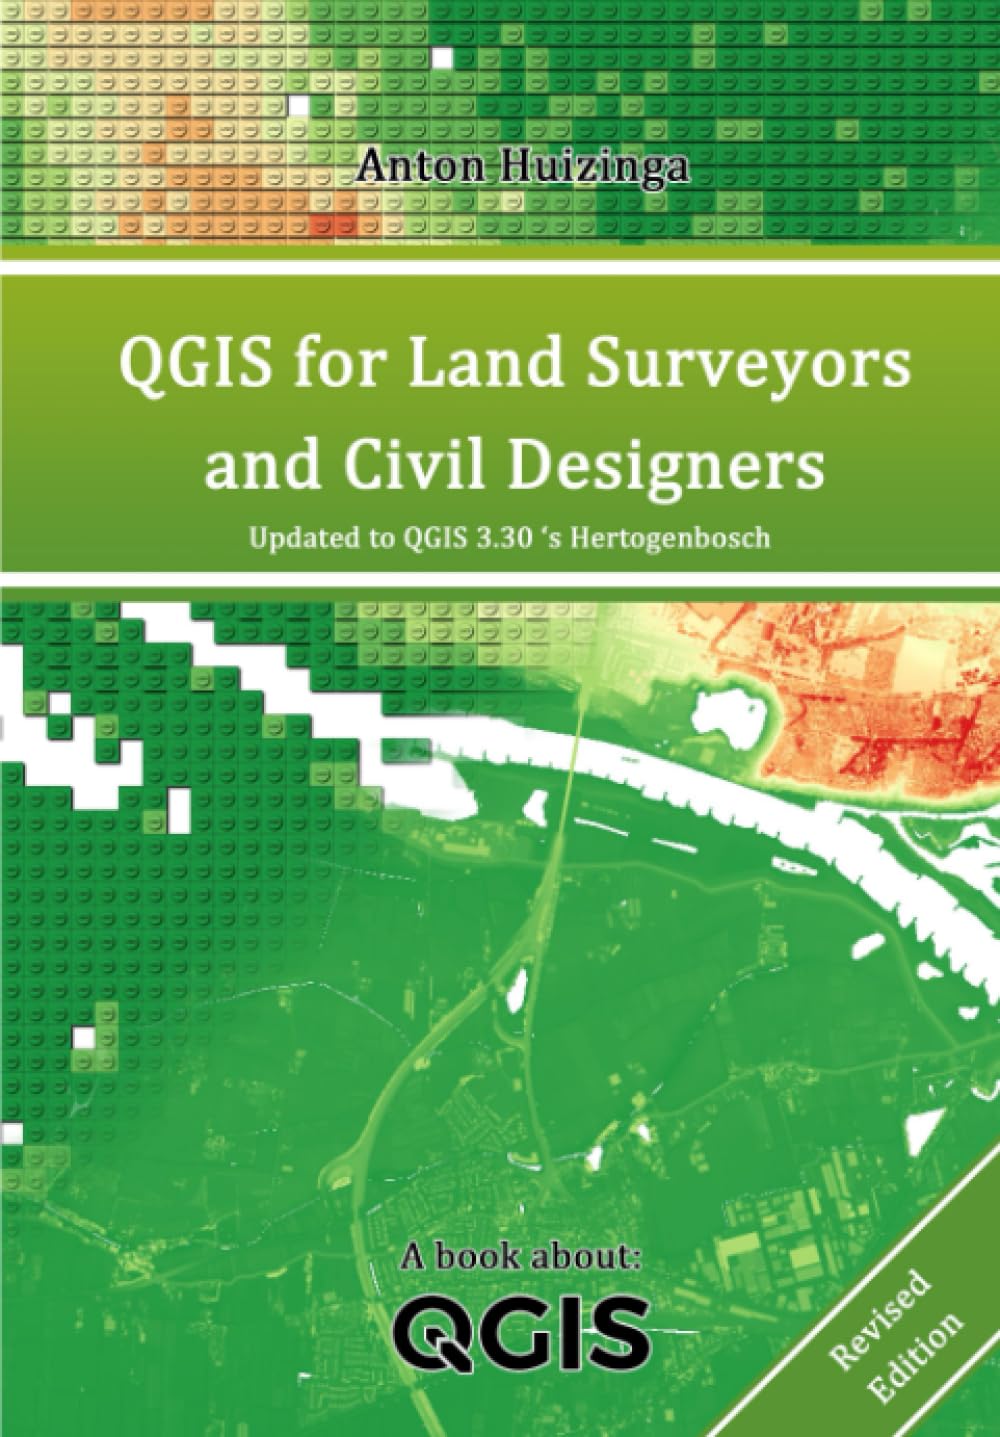 QGIS for Land Surveyors and Civil Designers